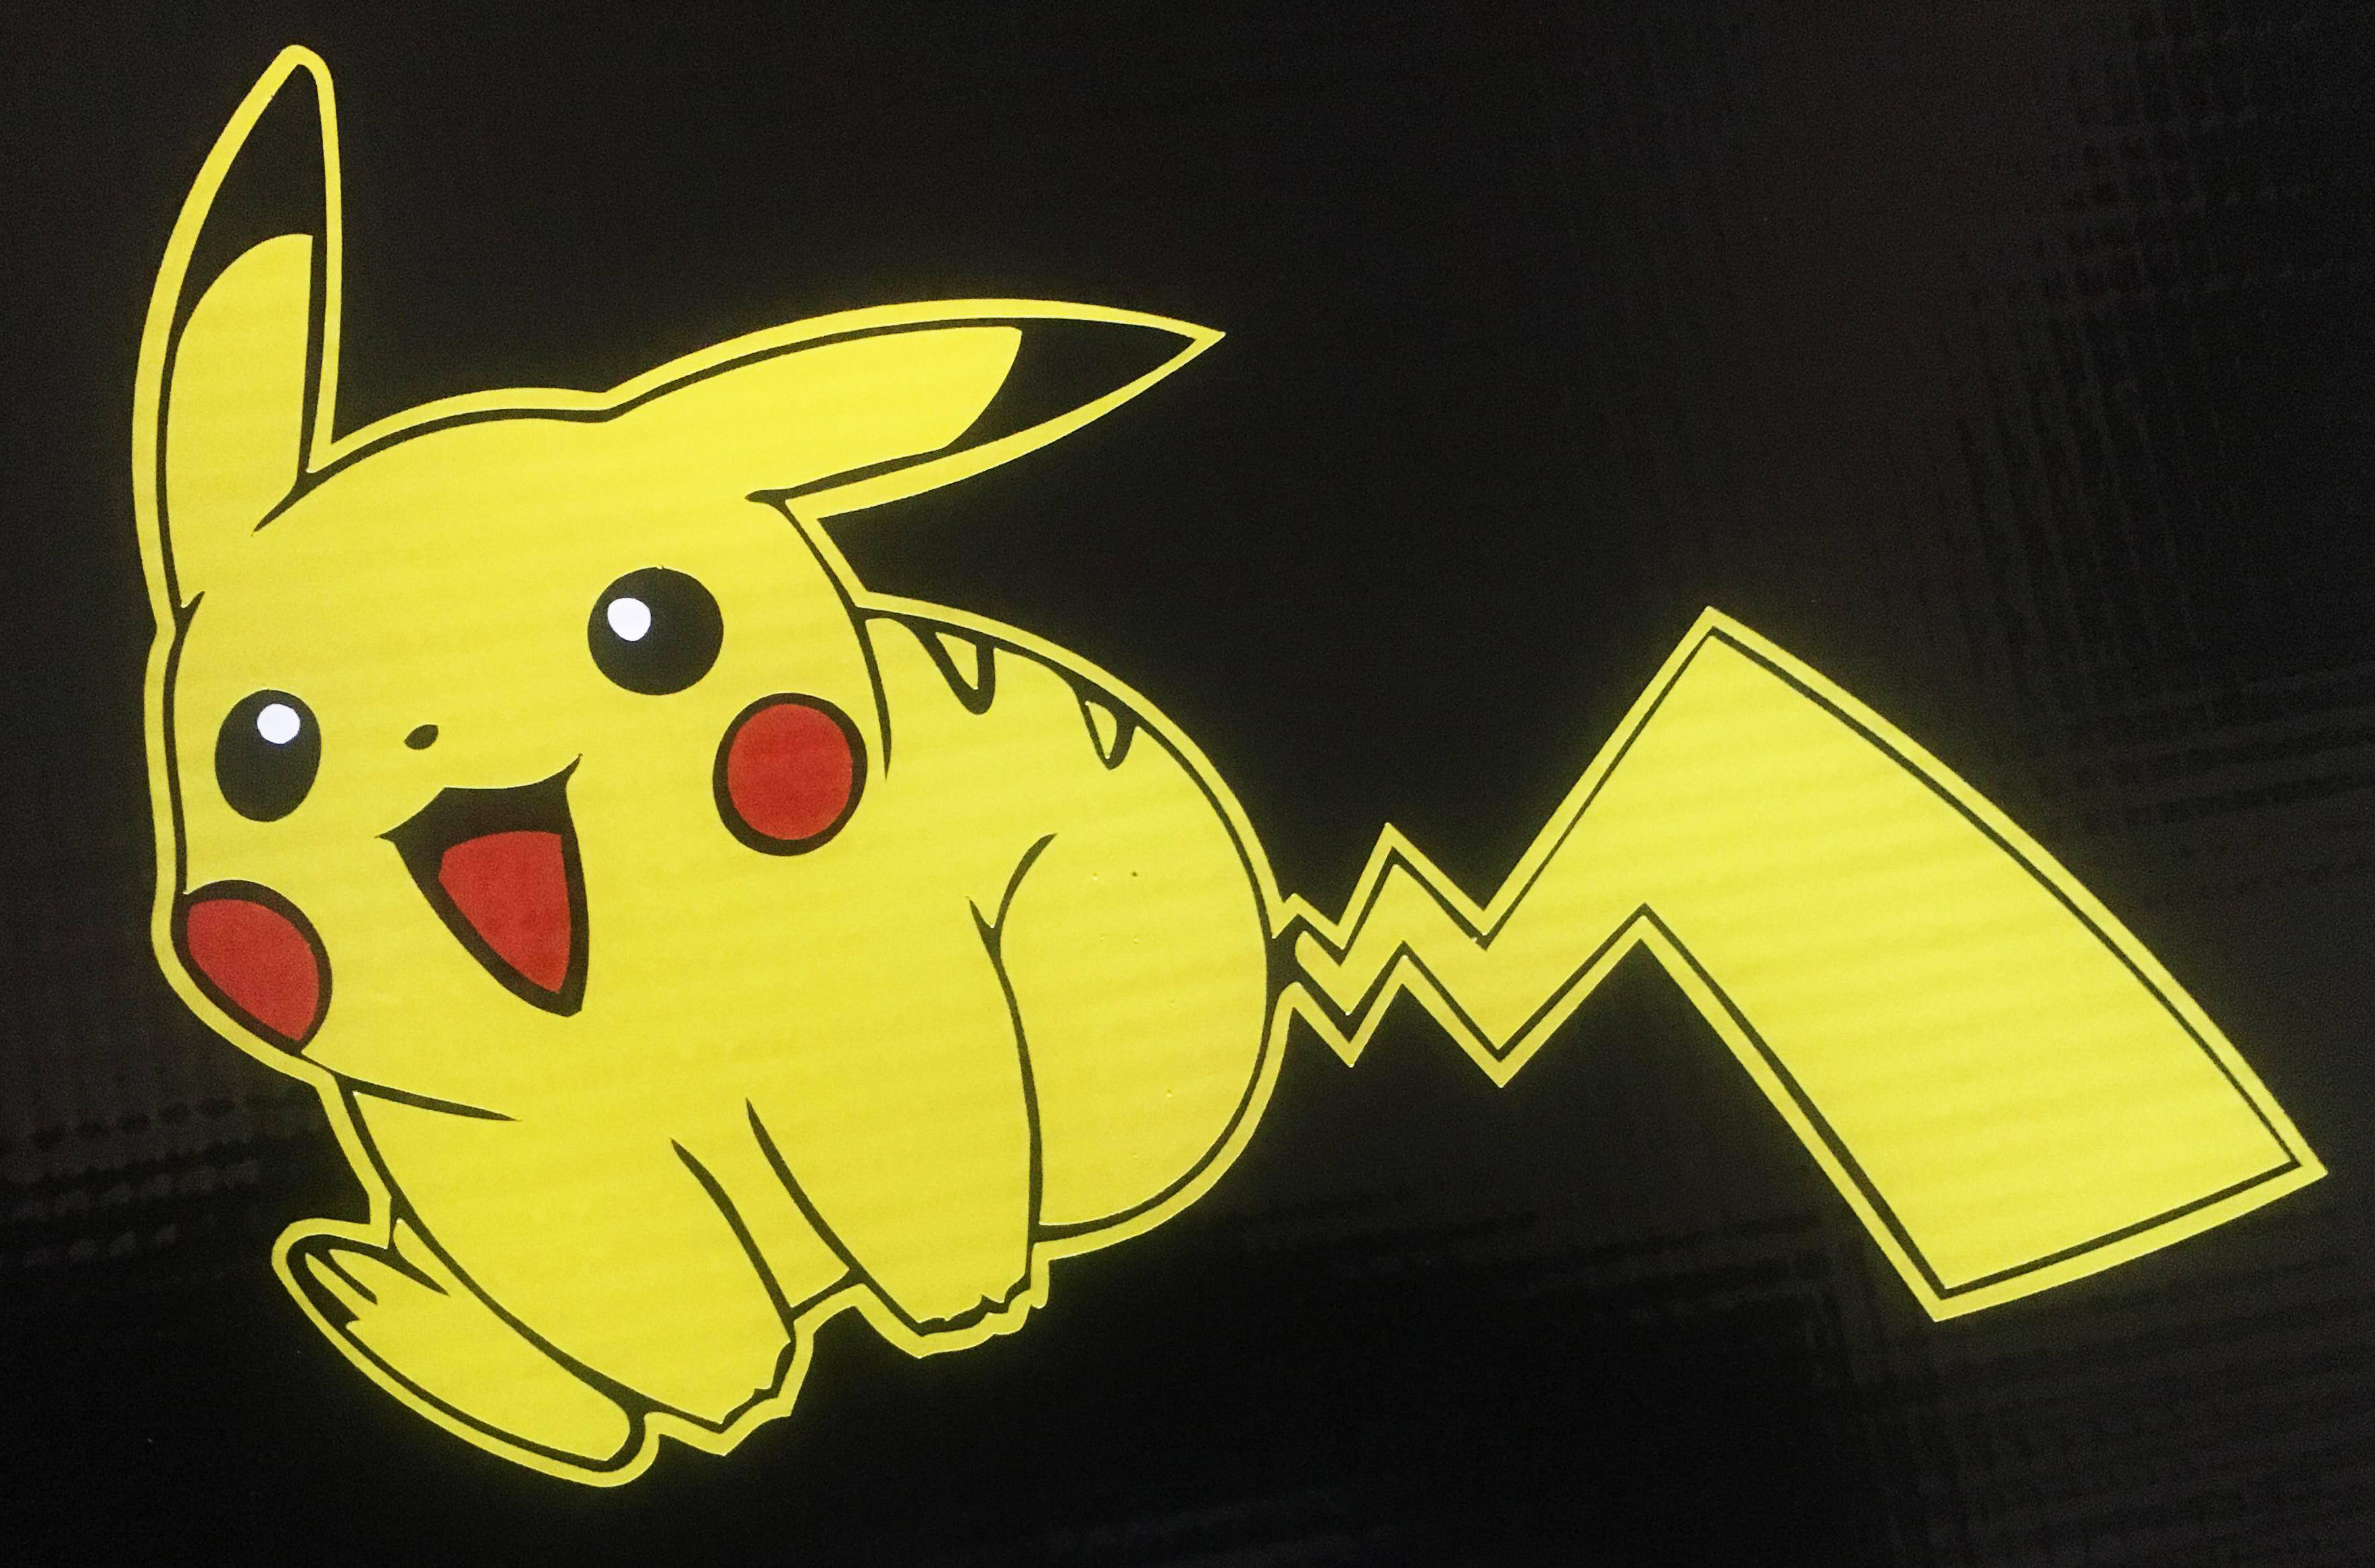 The most famous Pokemon, Pikachu